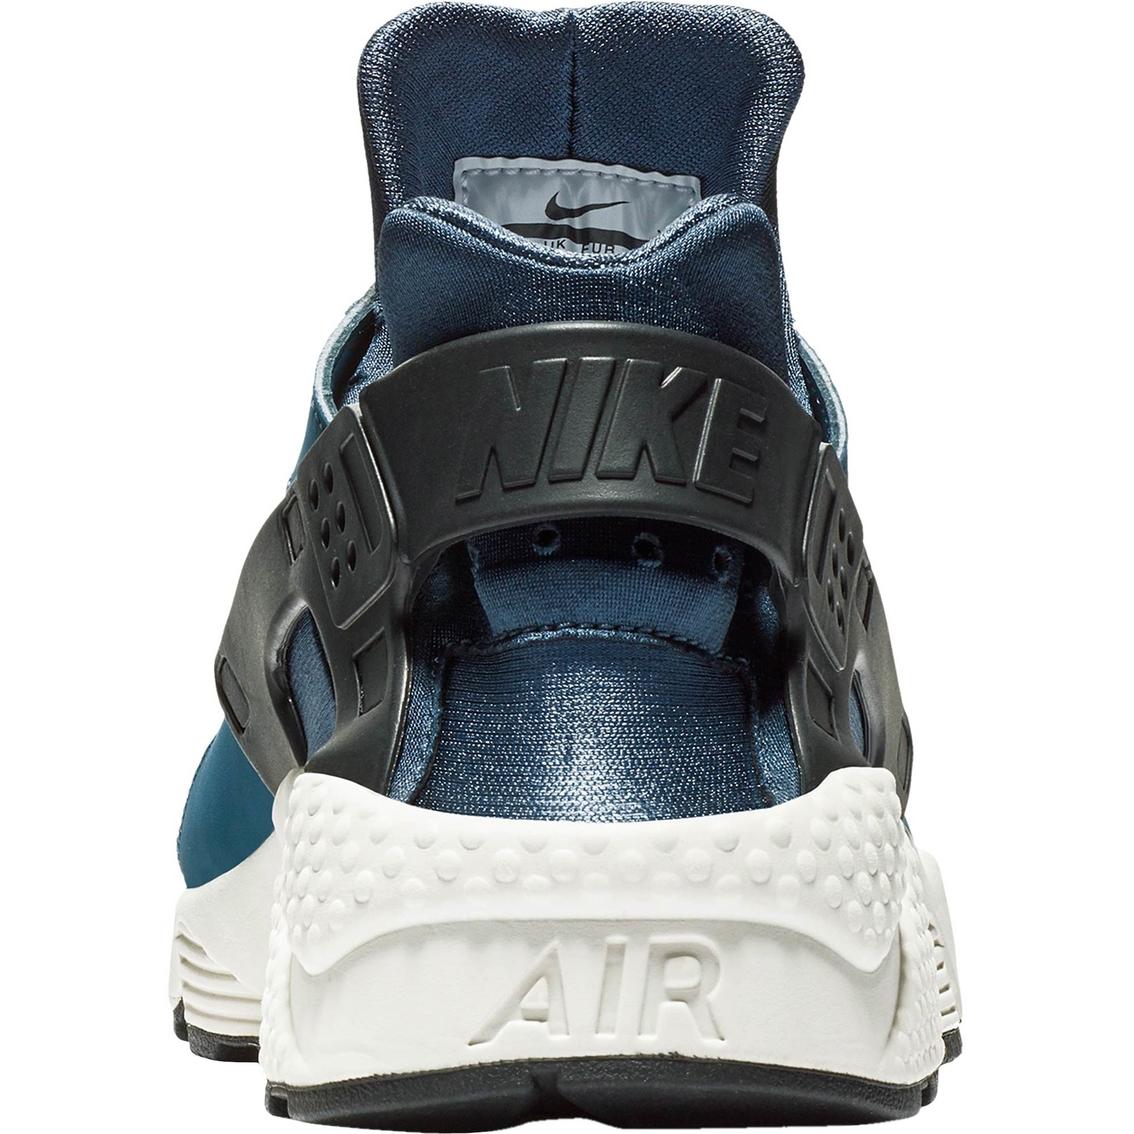 Nike Men's Air Huarache Running Shoes - Image 6 of 6